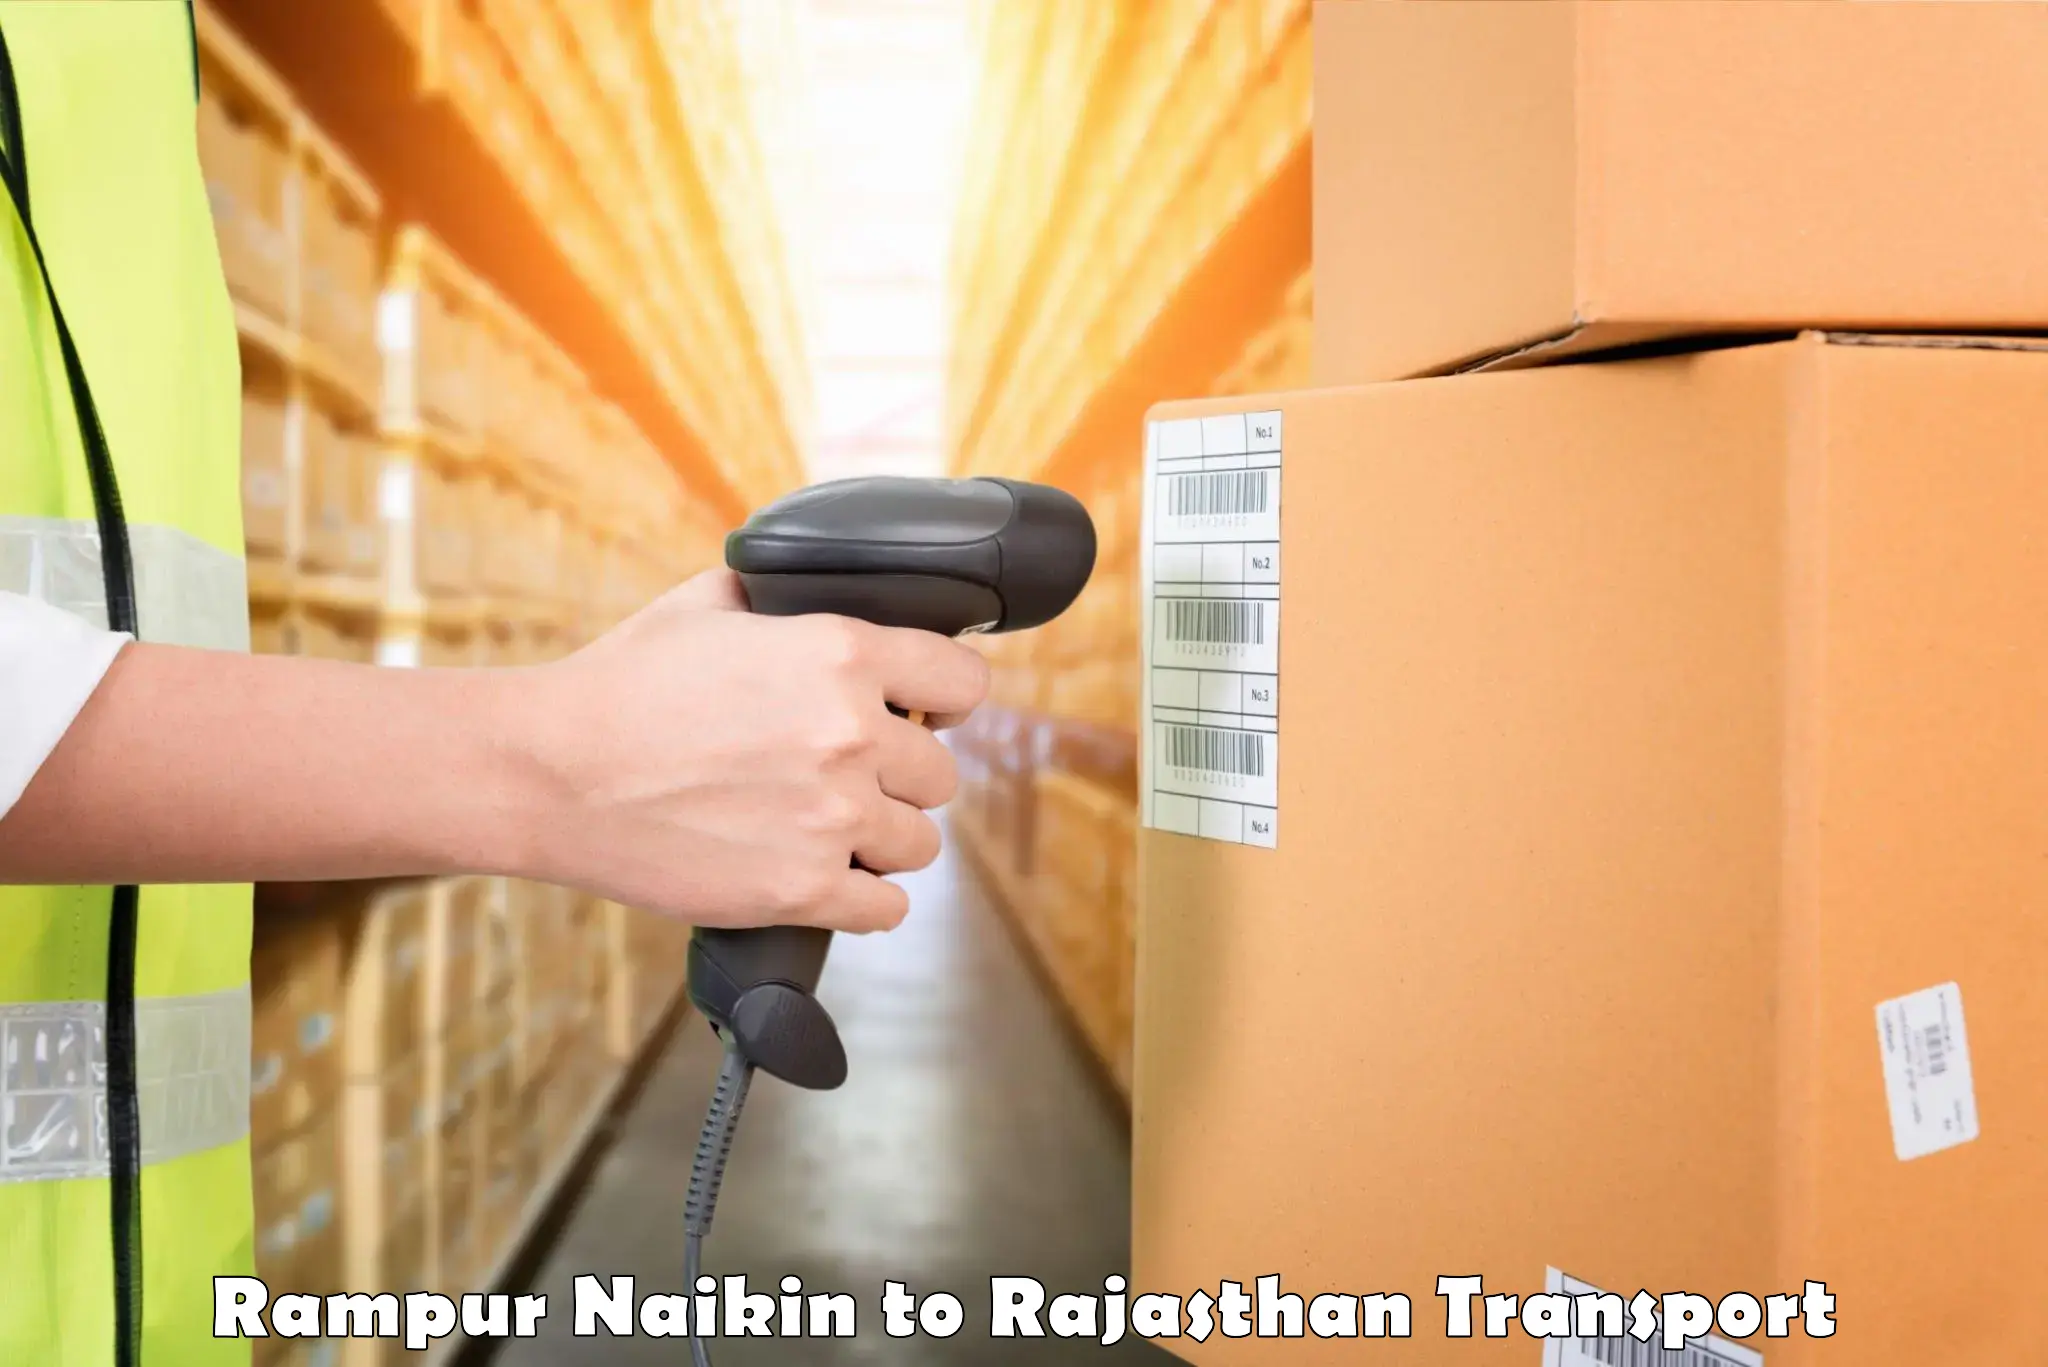 Truck transport companies in India Rampur Naikin to Rajasthan